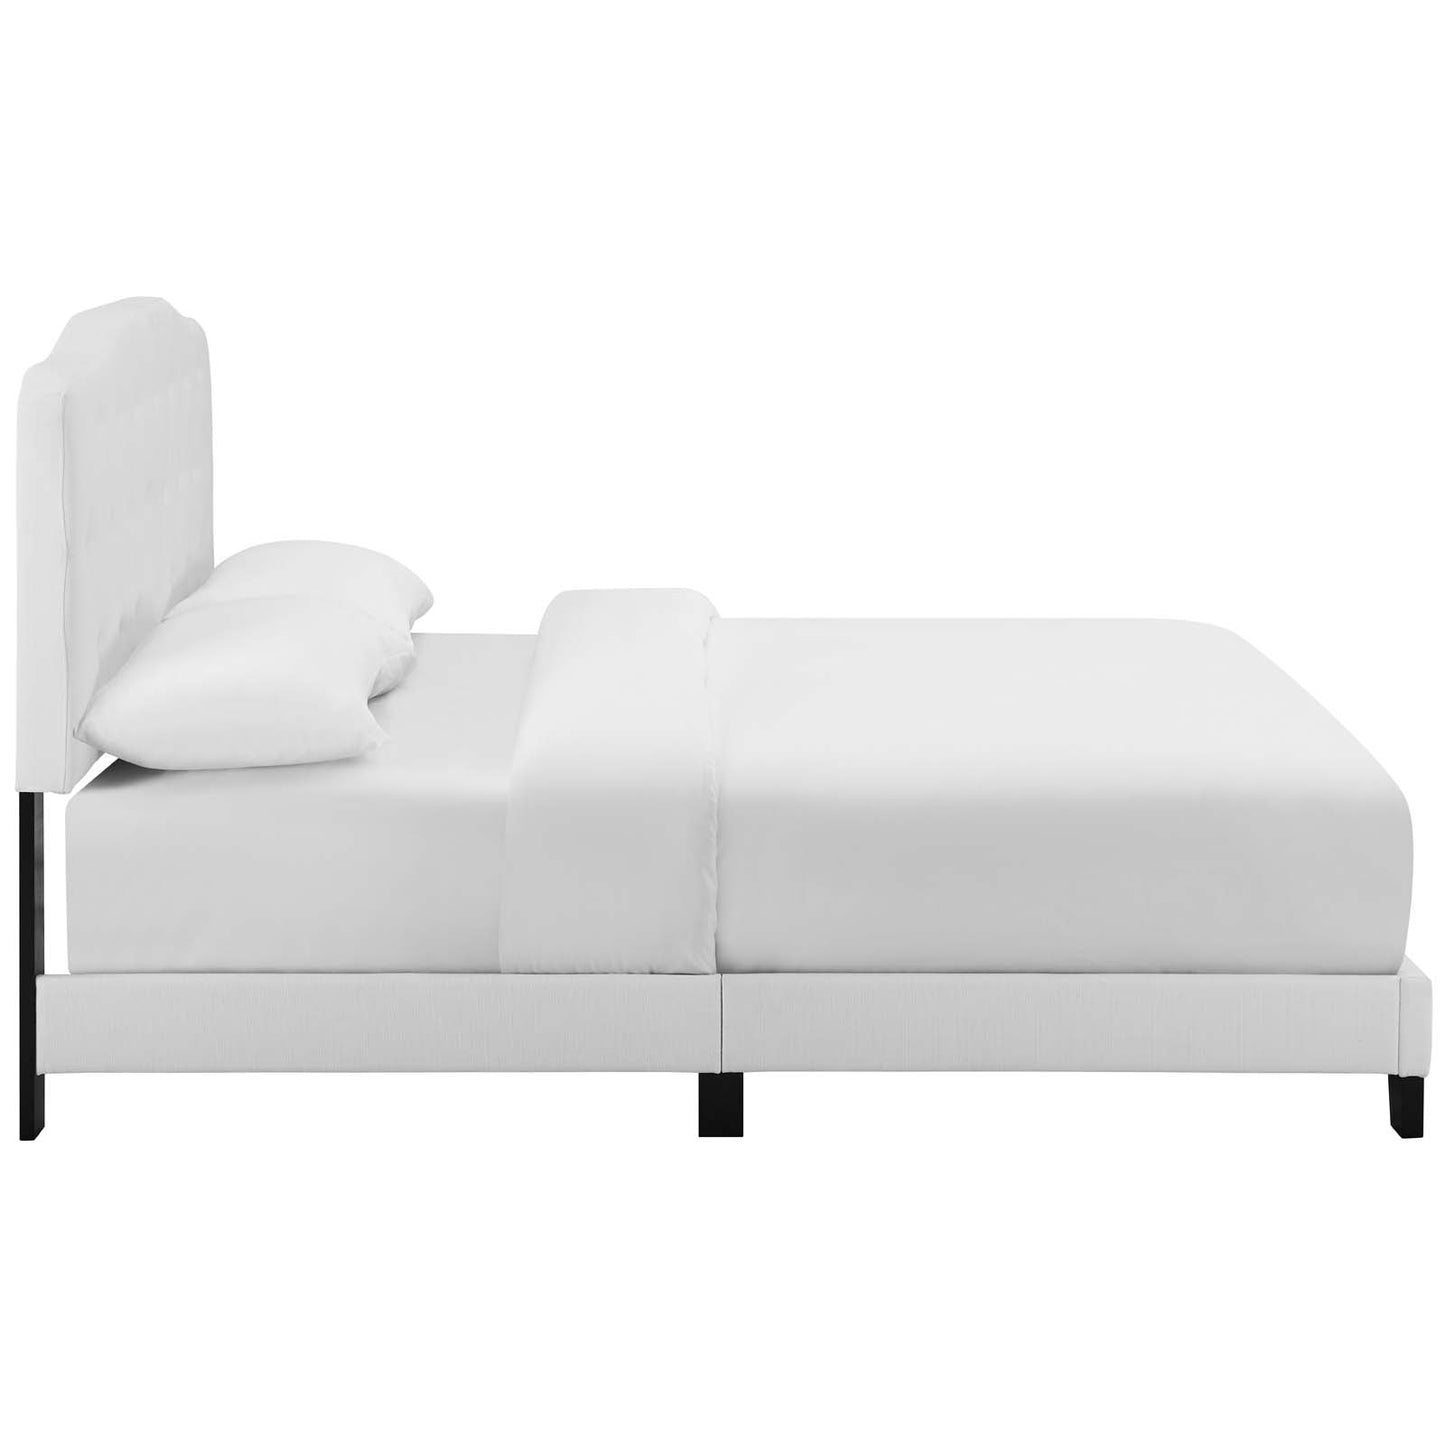 Amelia Full Upholstered Fabric Bed White MOD-5839-WHI